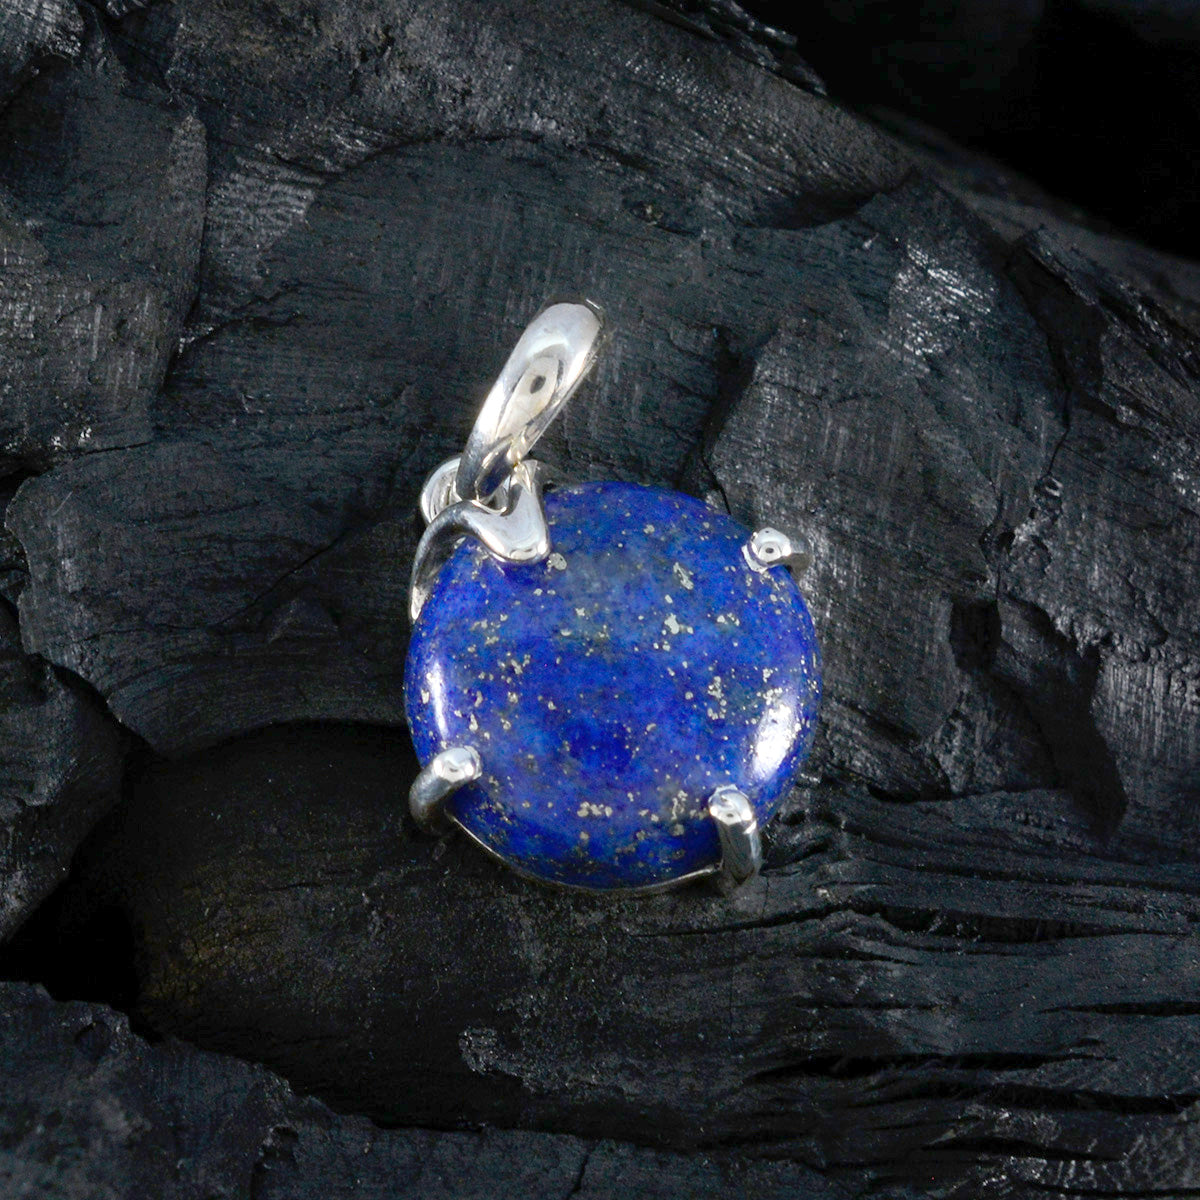 Riyo Winsome Gemstone Round Cabochon Nevy Blue Lapis Lazuli Sterling Silver Pendant Gift For Handmade